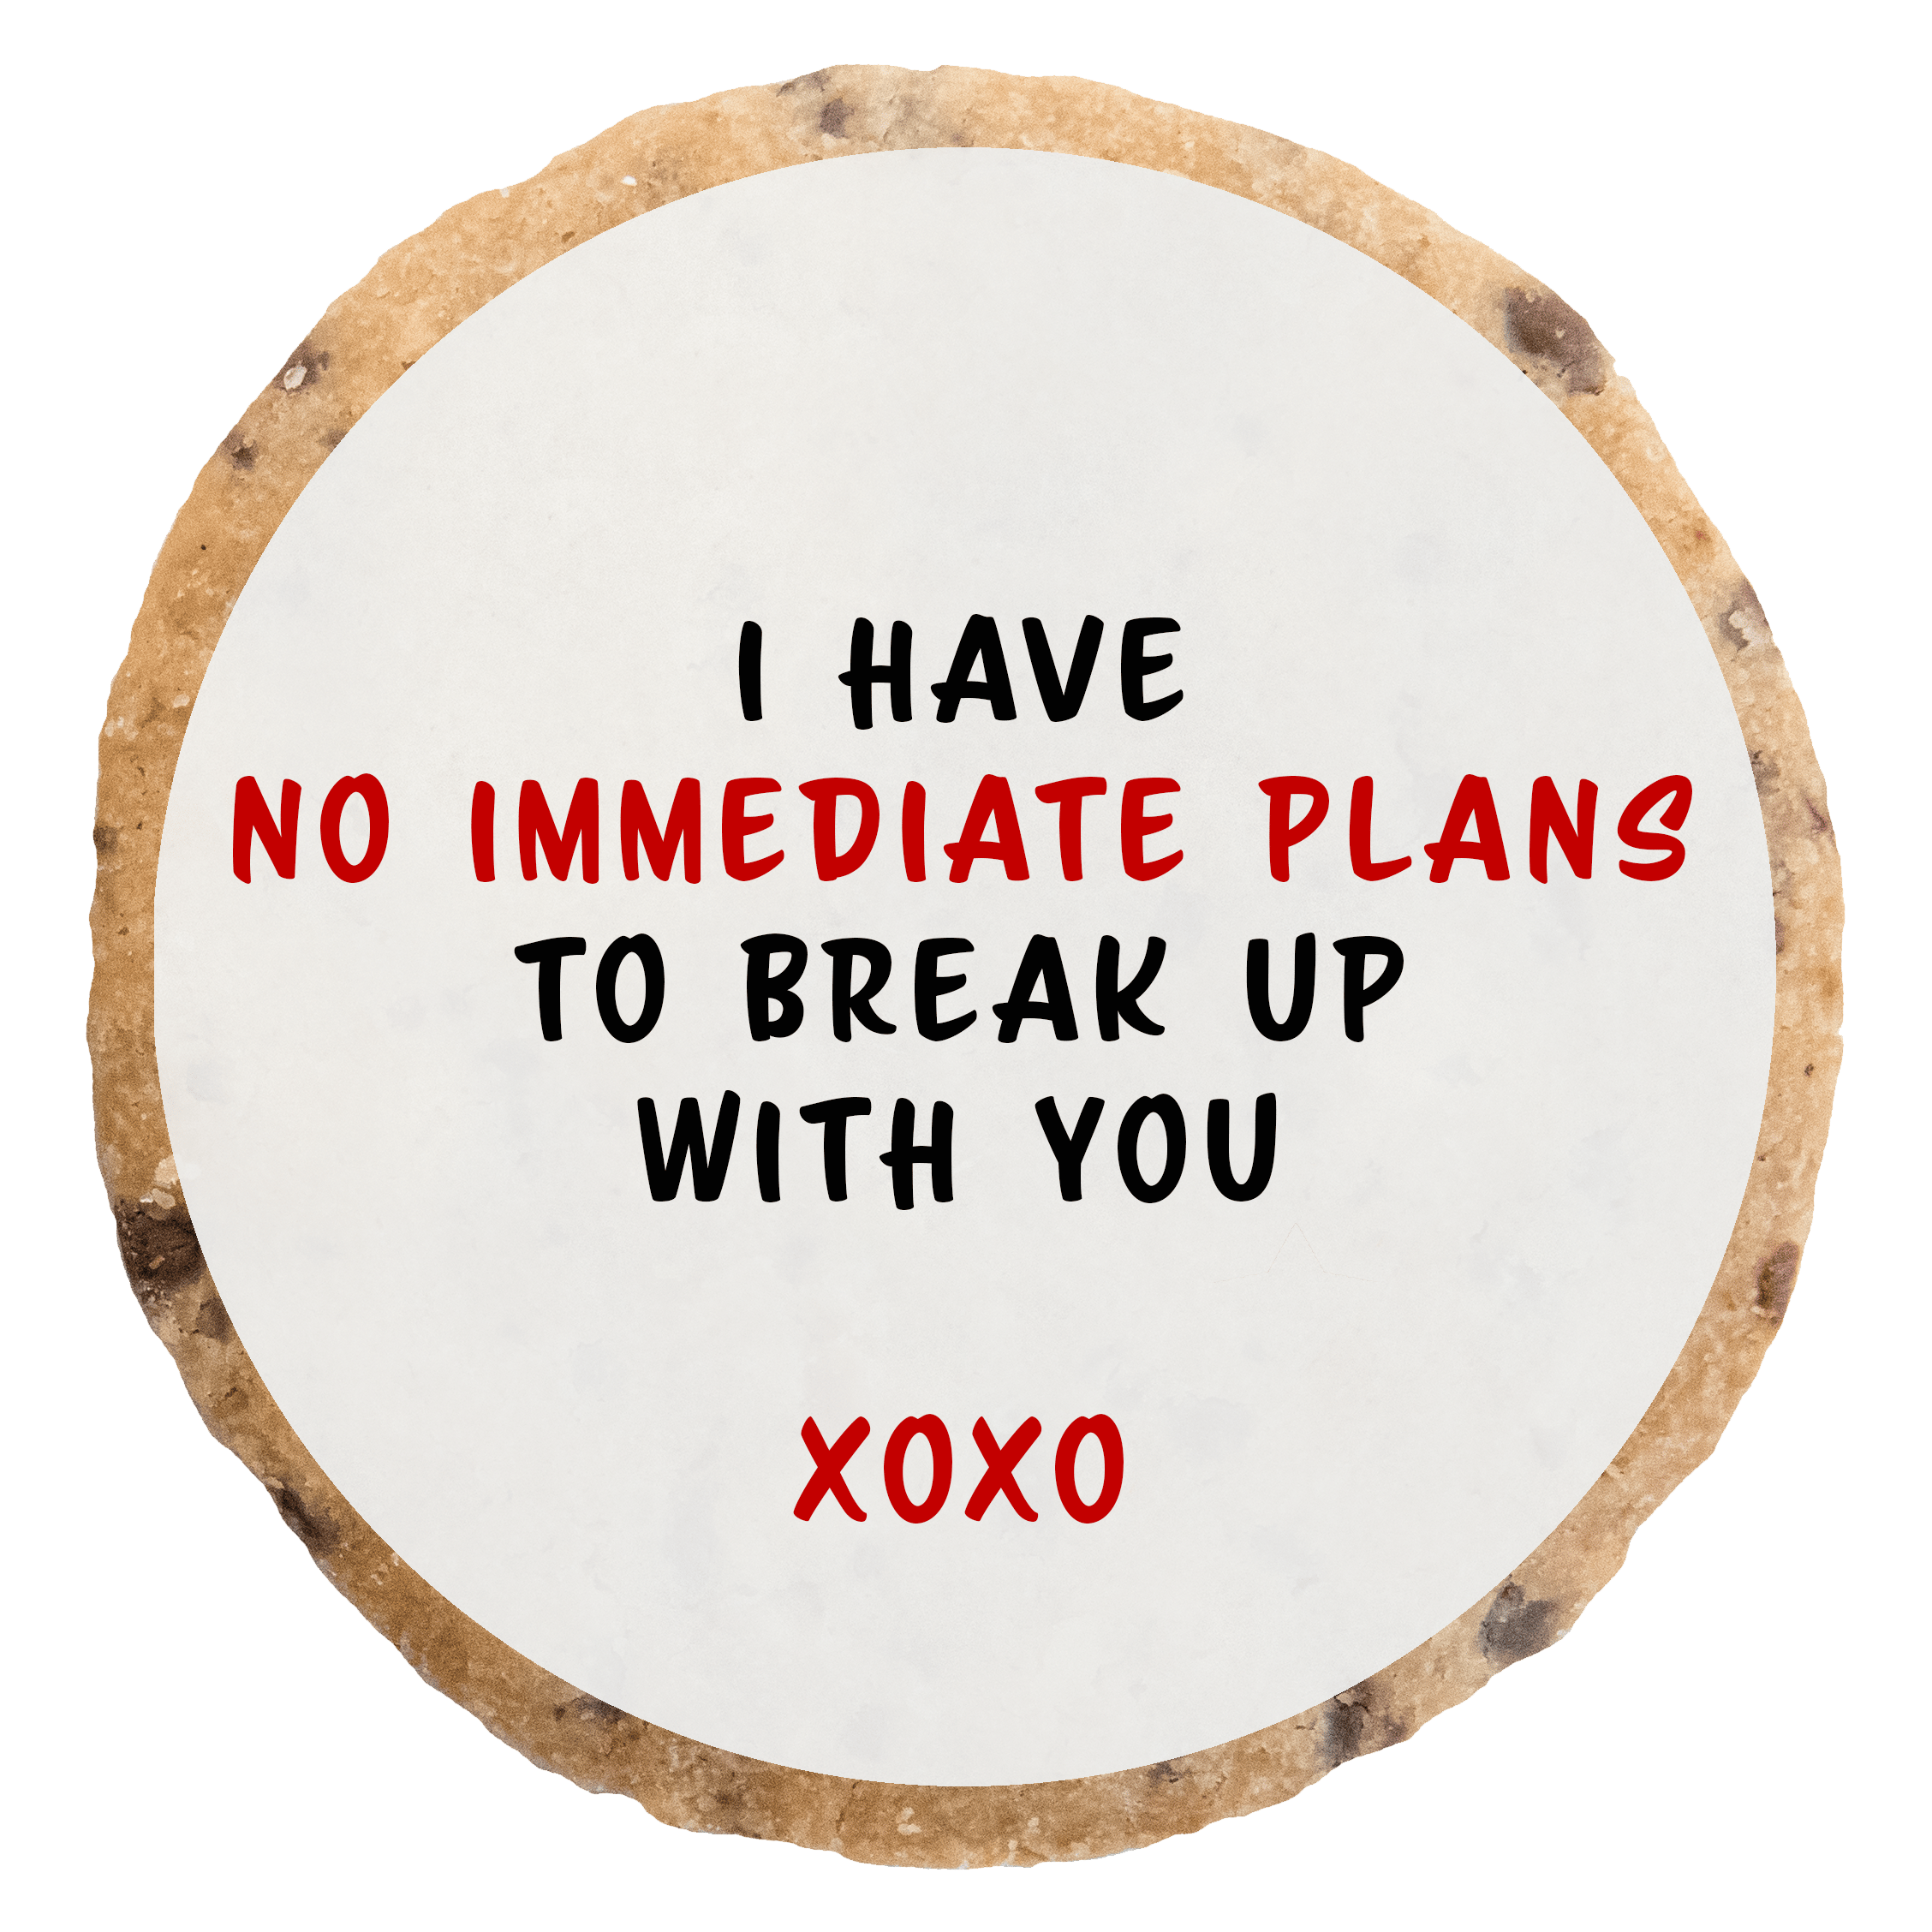 "No immediate plans to break up" MotivKEKS